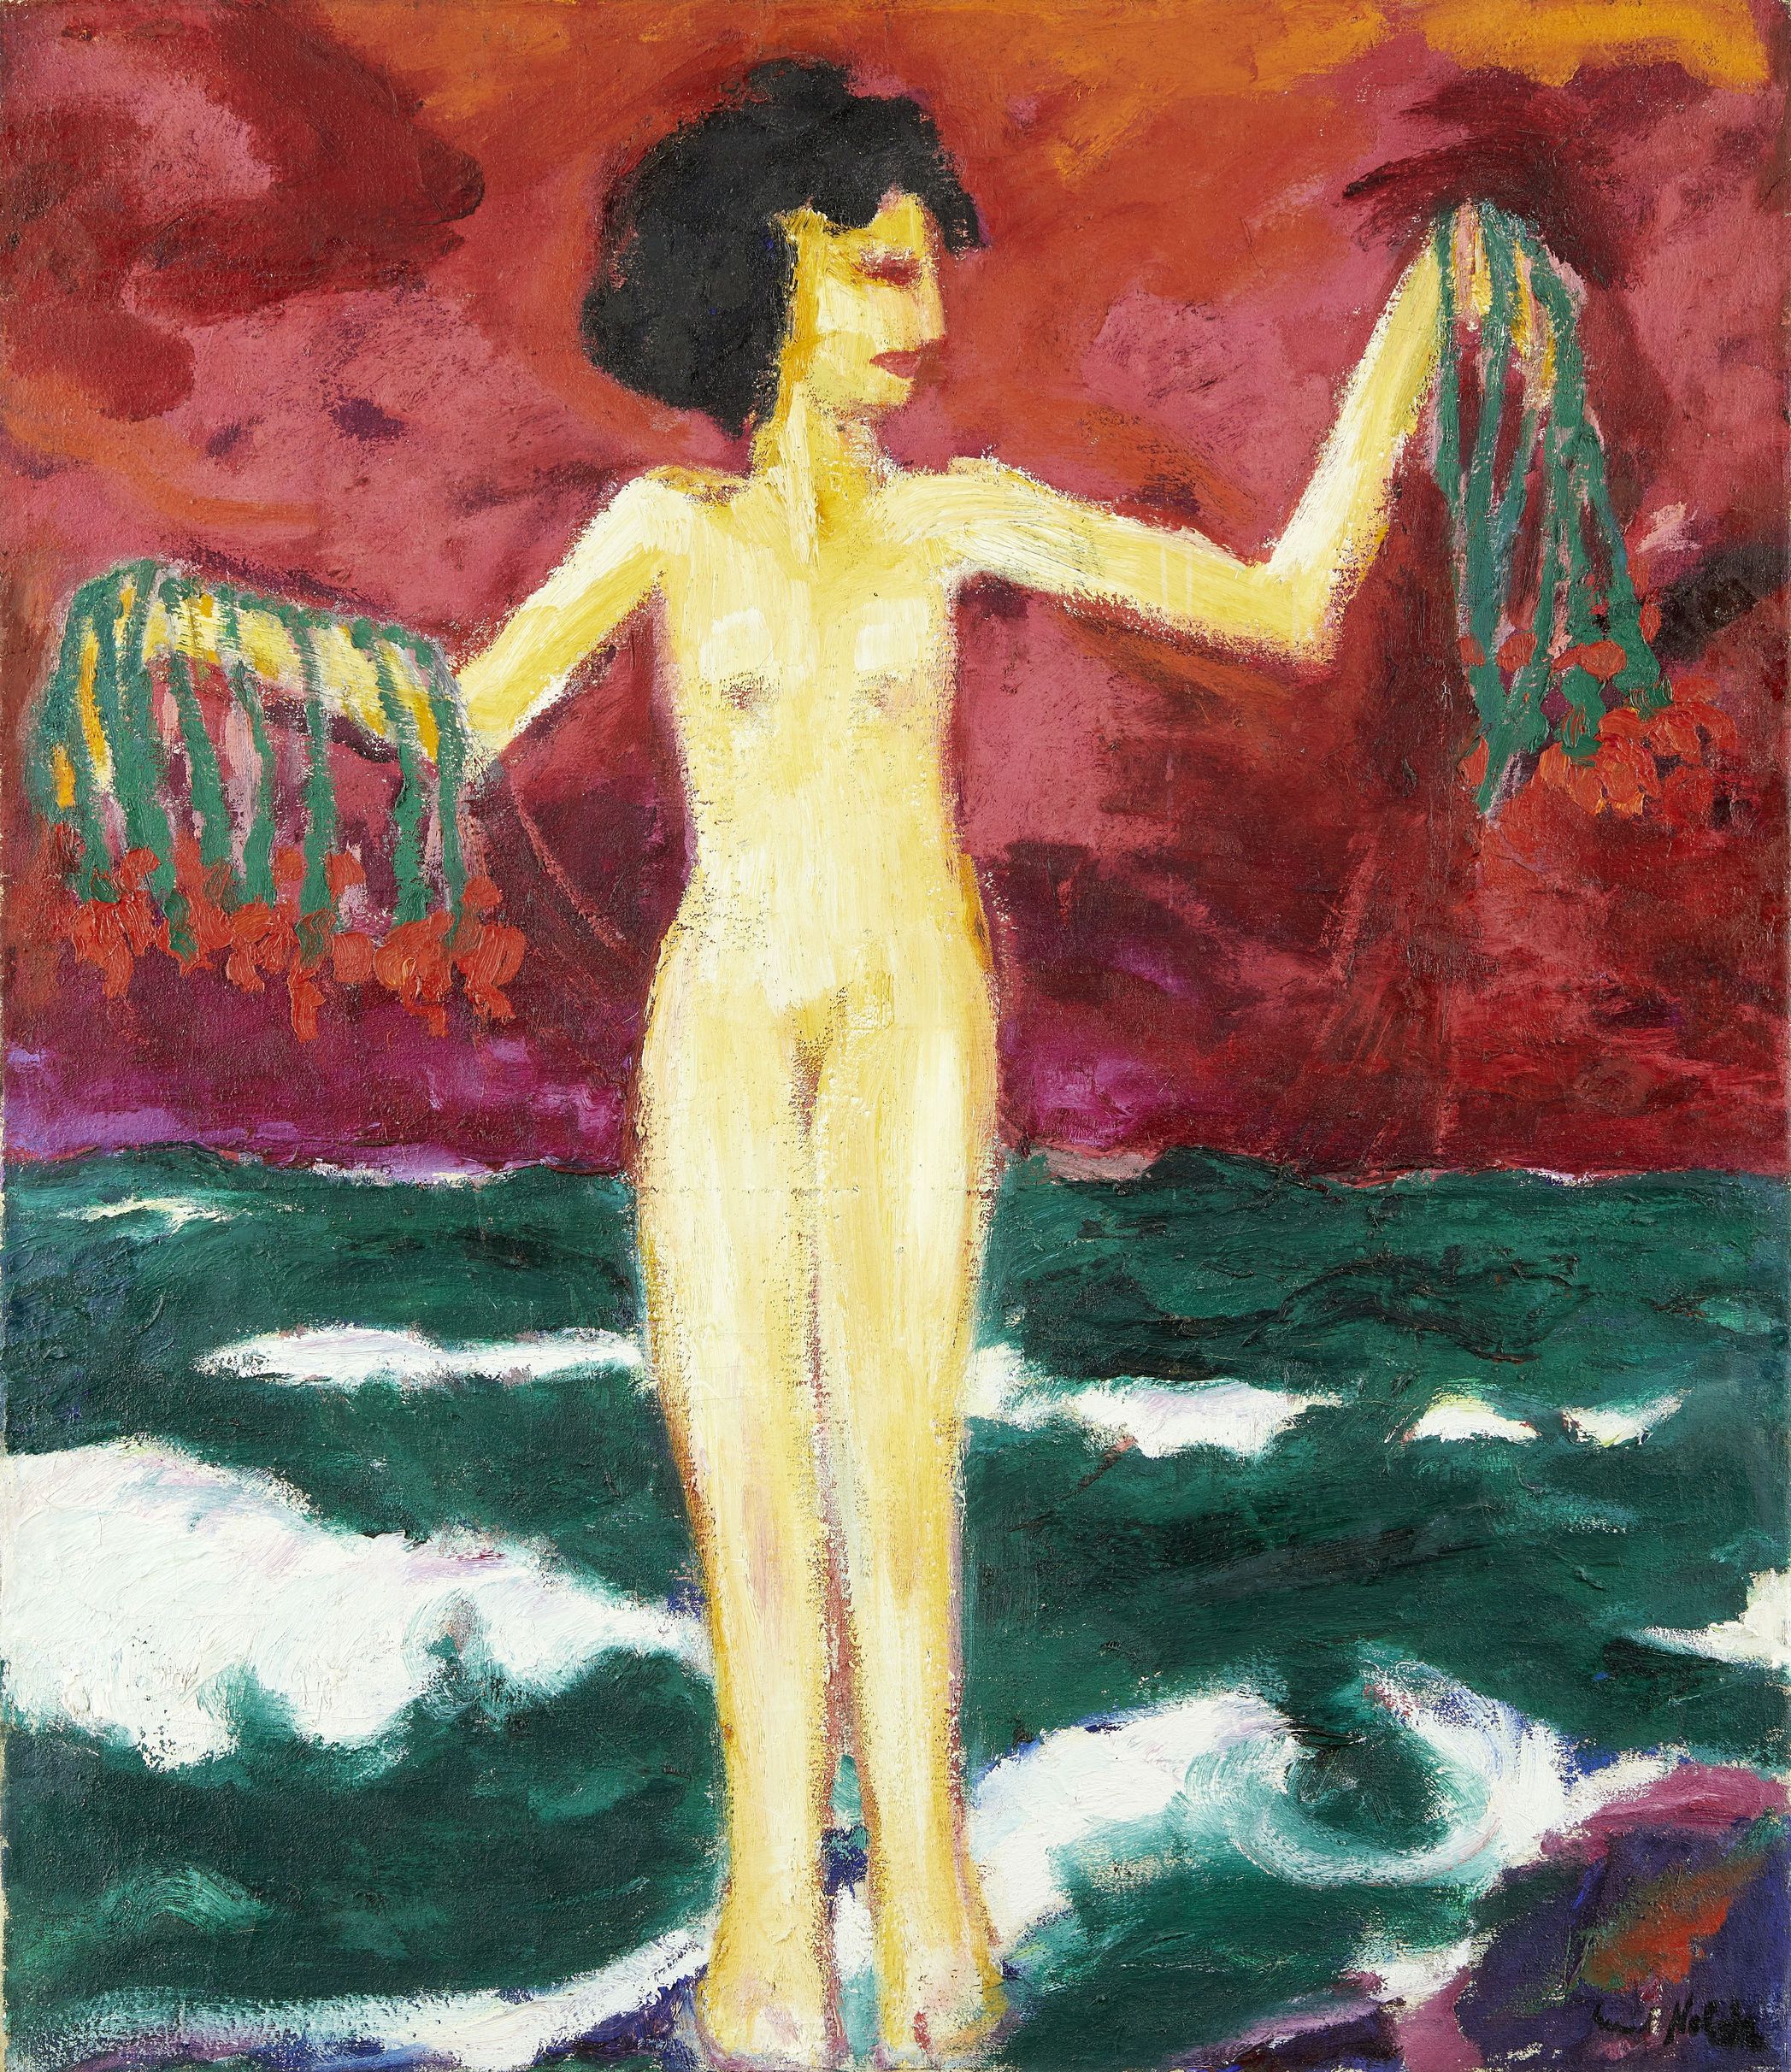 Kunstkarte: "Mädchen am Meer", 1912